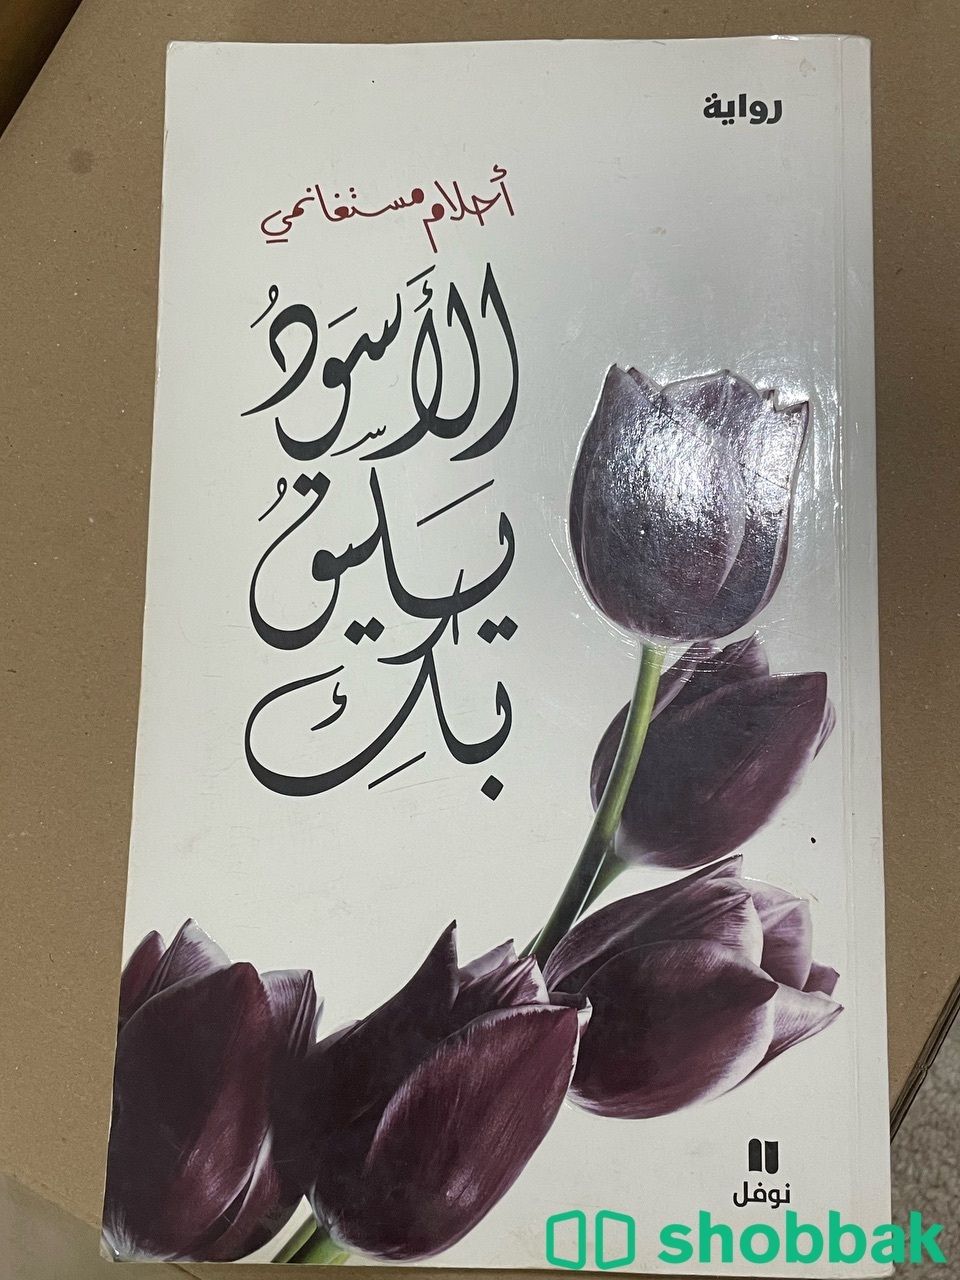 مجموعه كتب نظيفه مسعمله لكن جداً ممتازه  Shobbak Saudi Arabia